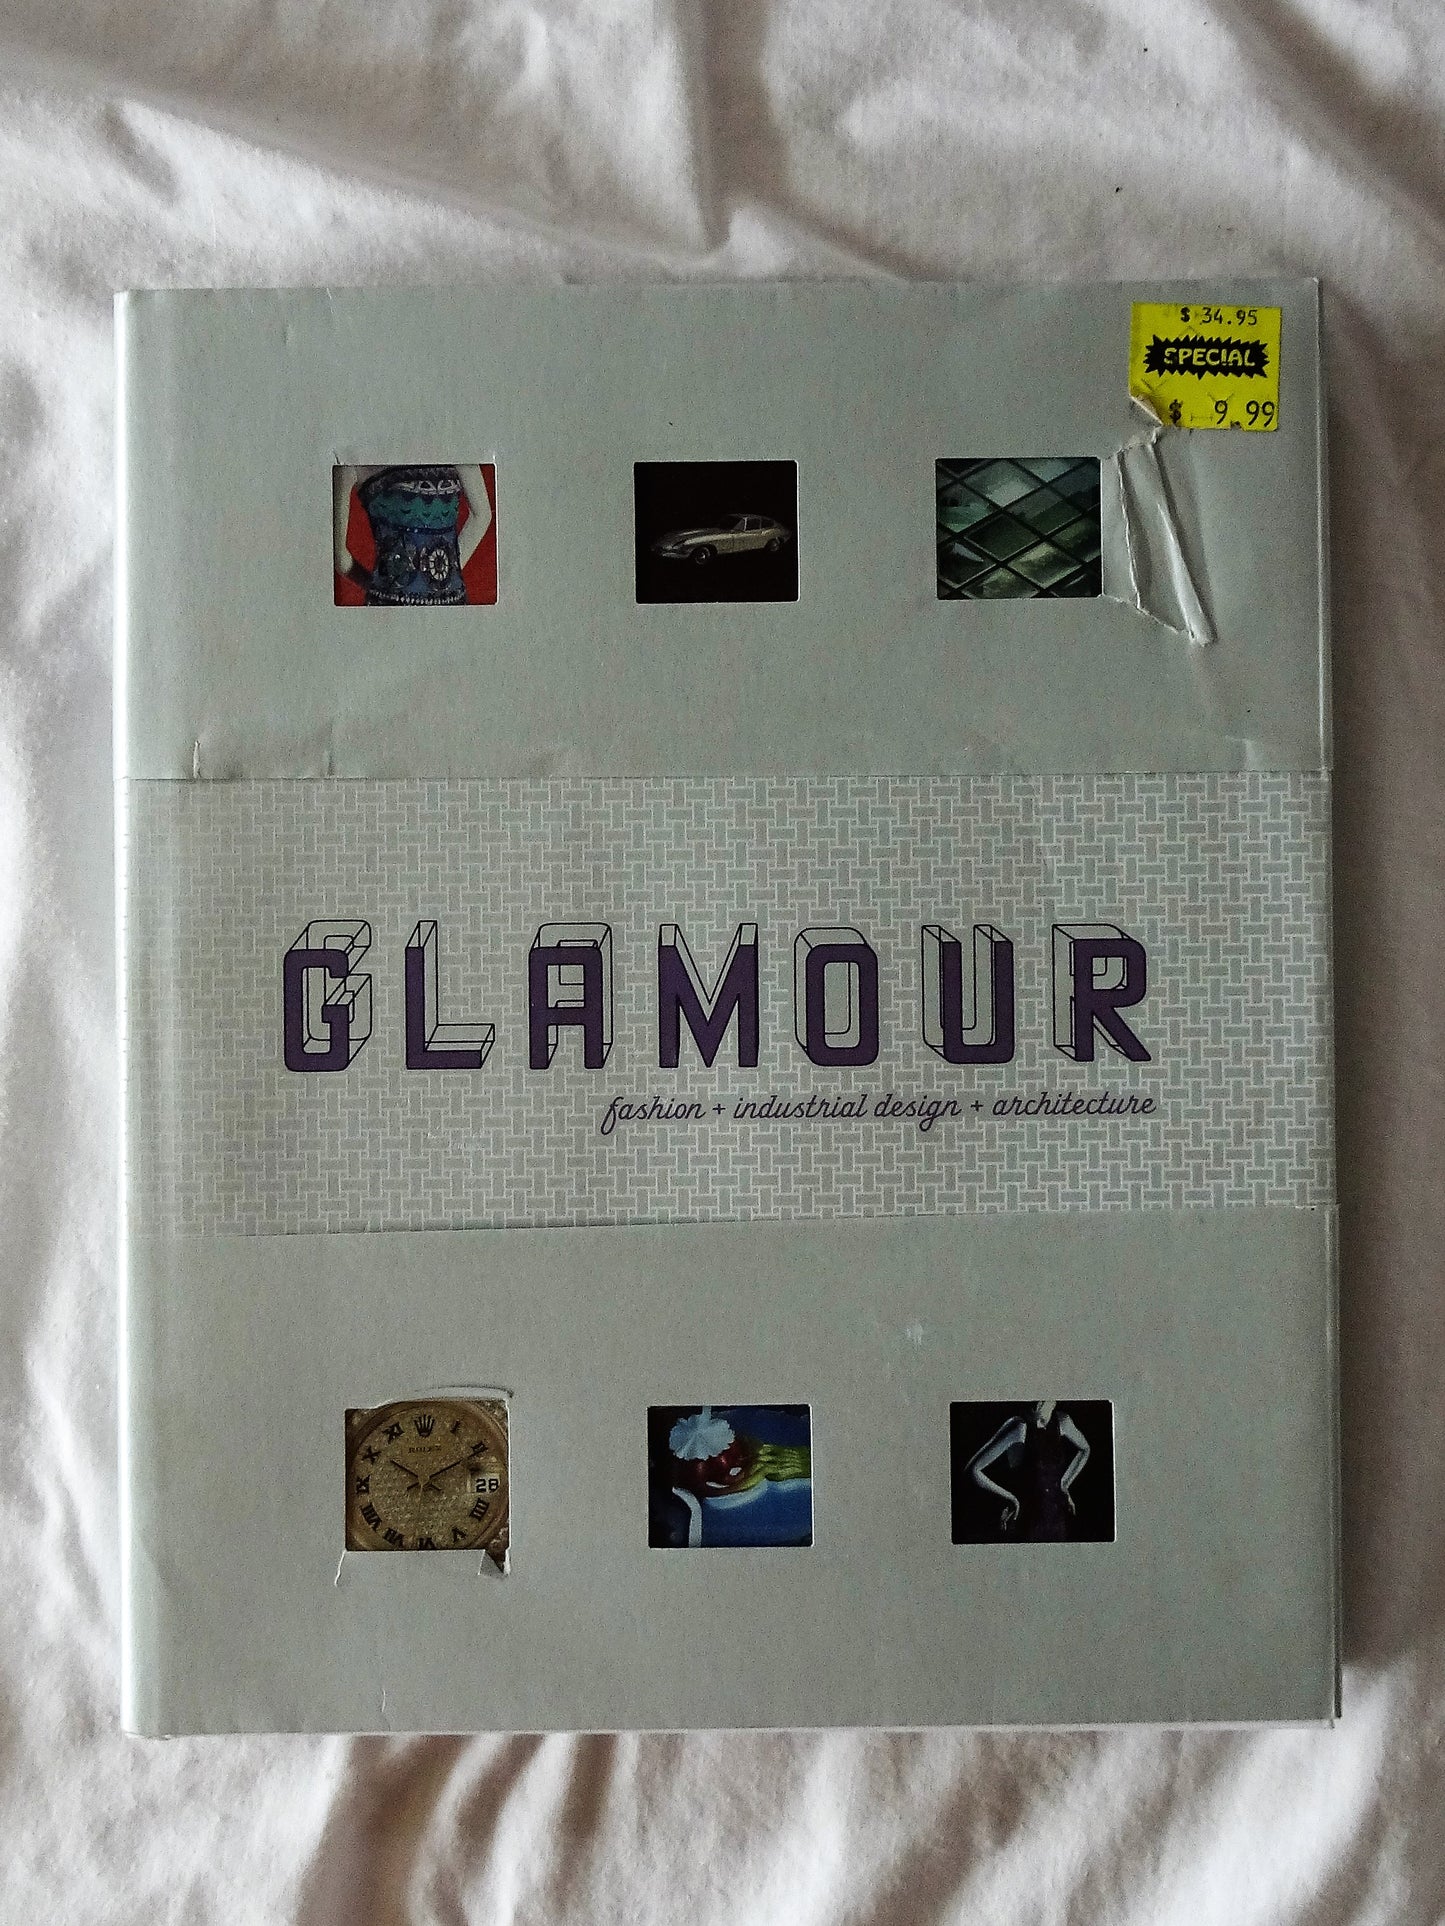 Glamour fashion + industrial design + architecture  Edited by Joseph Rosa, Phil Patton, Virginia Postrel, Valerie Steele